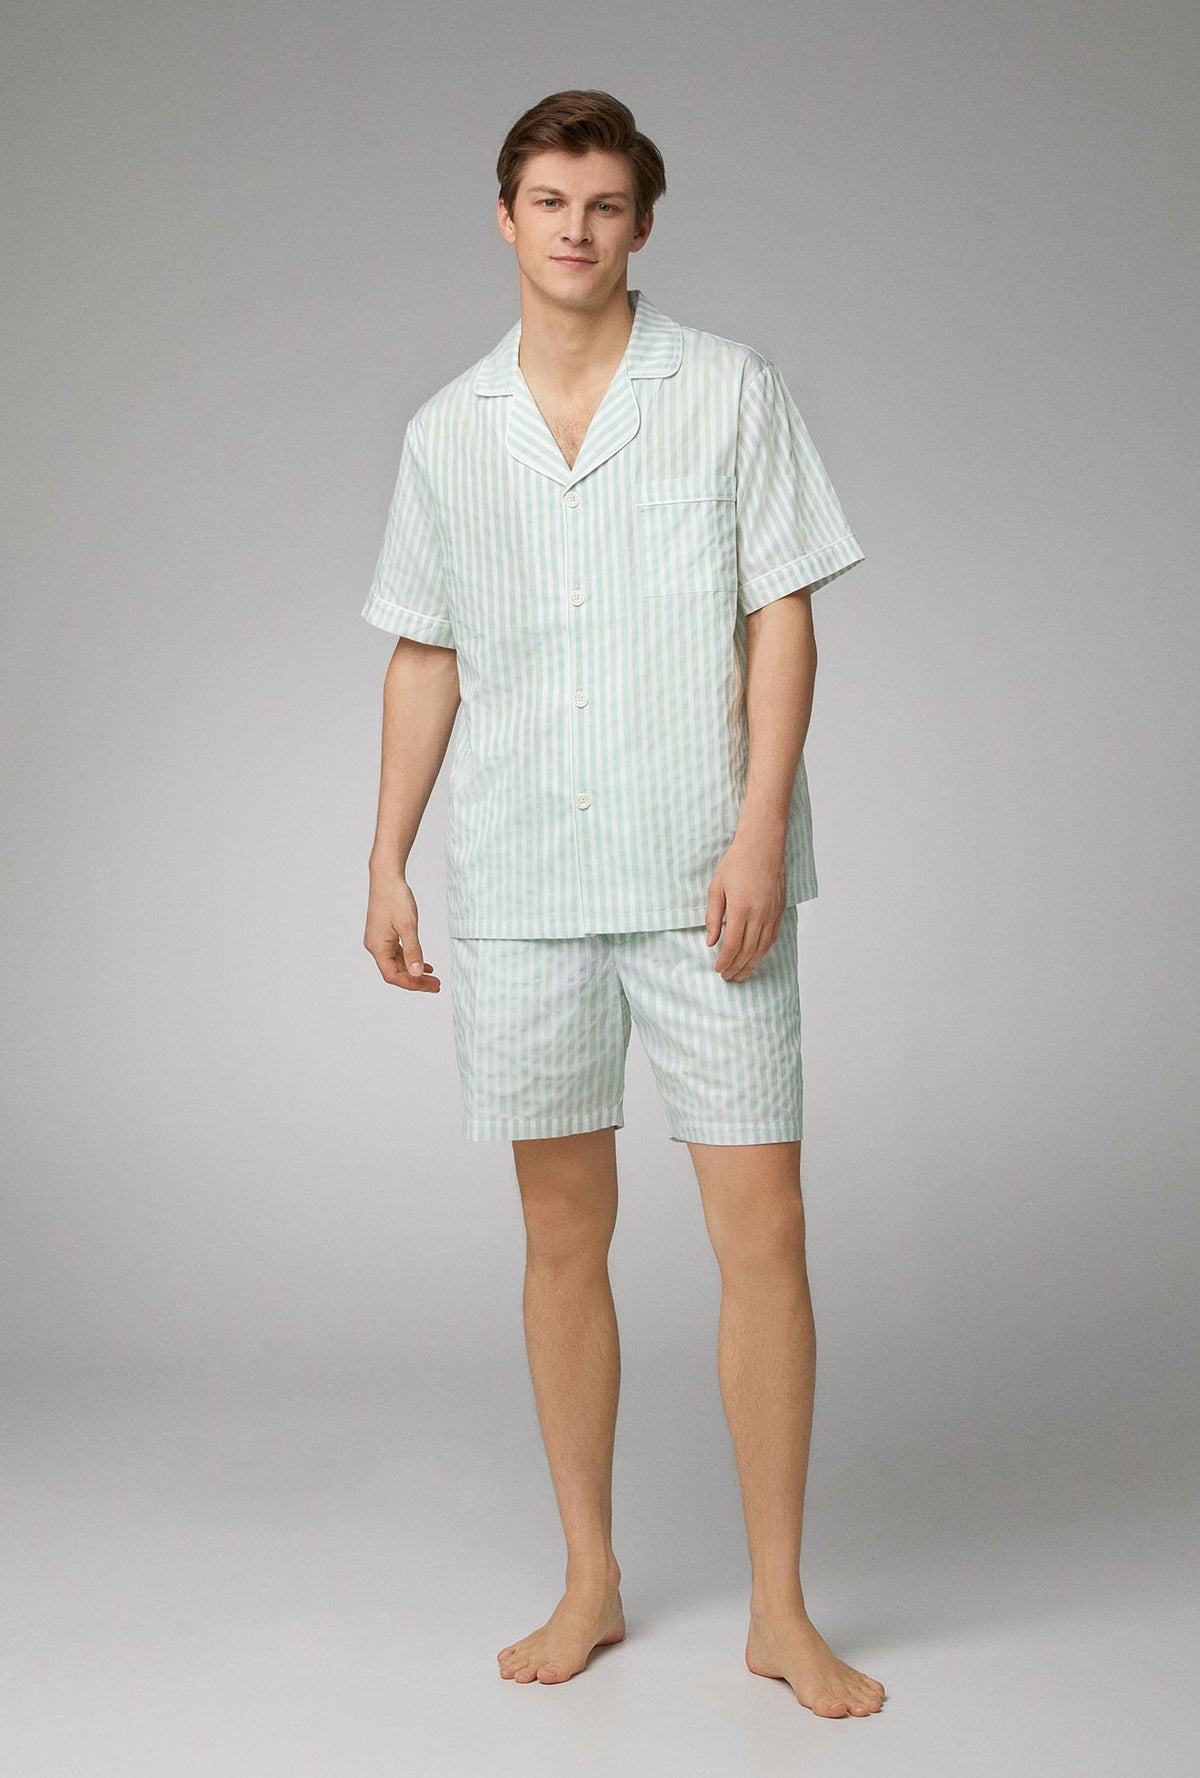 Fashion Men Sleepwear Striped Cotton Pajama Sets For Men Short